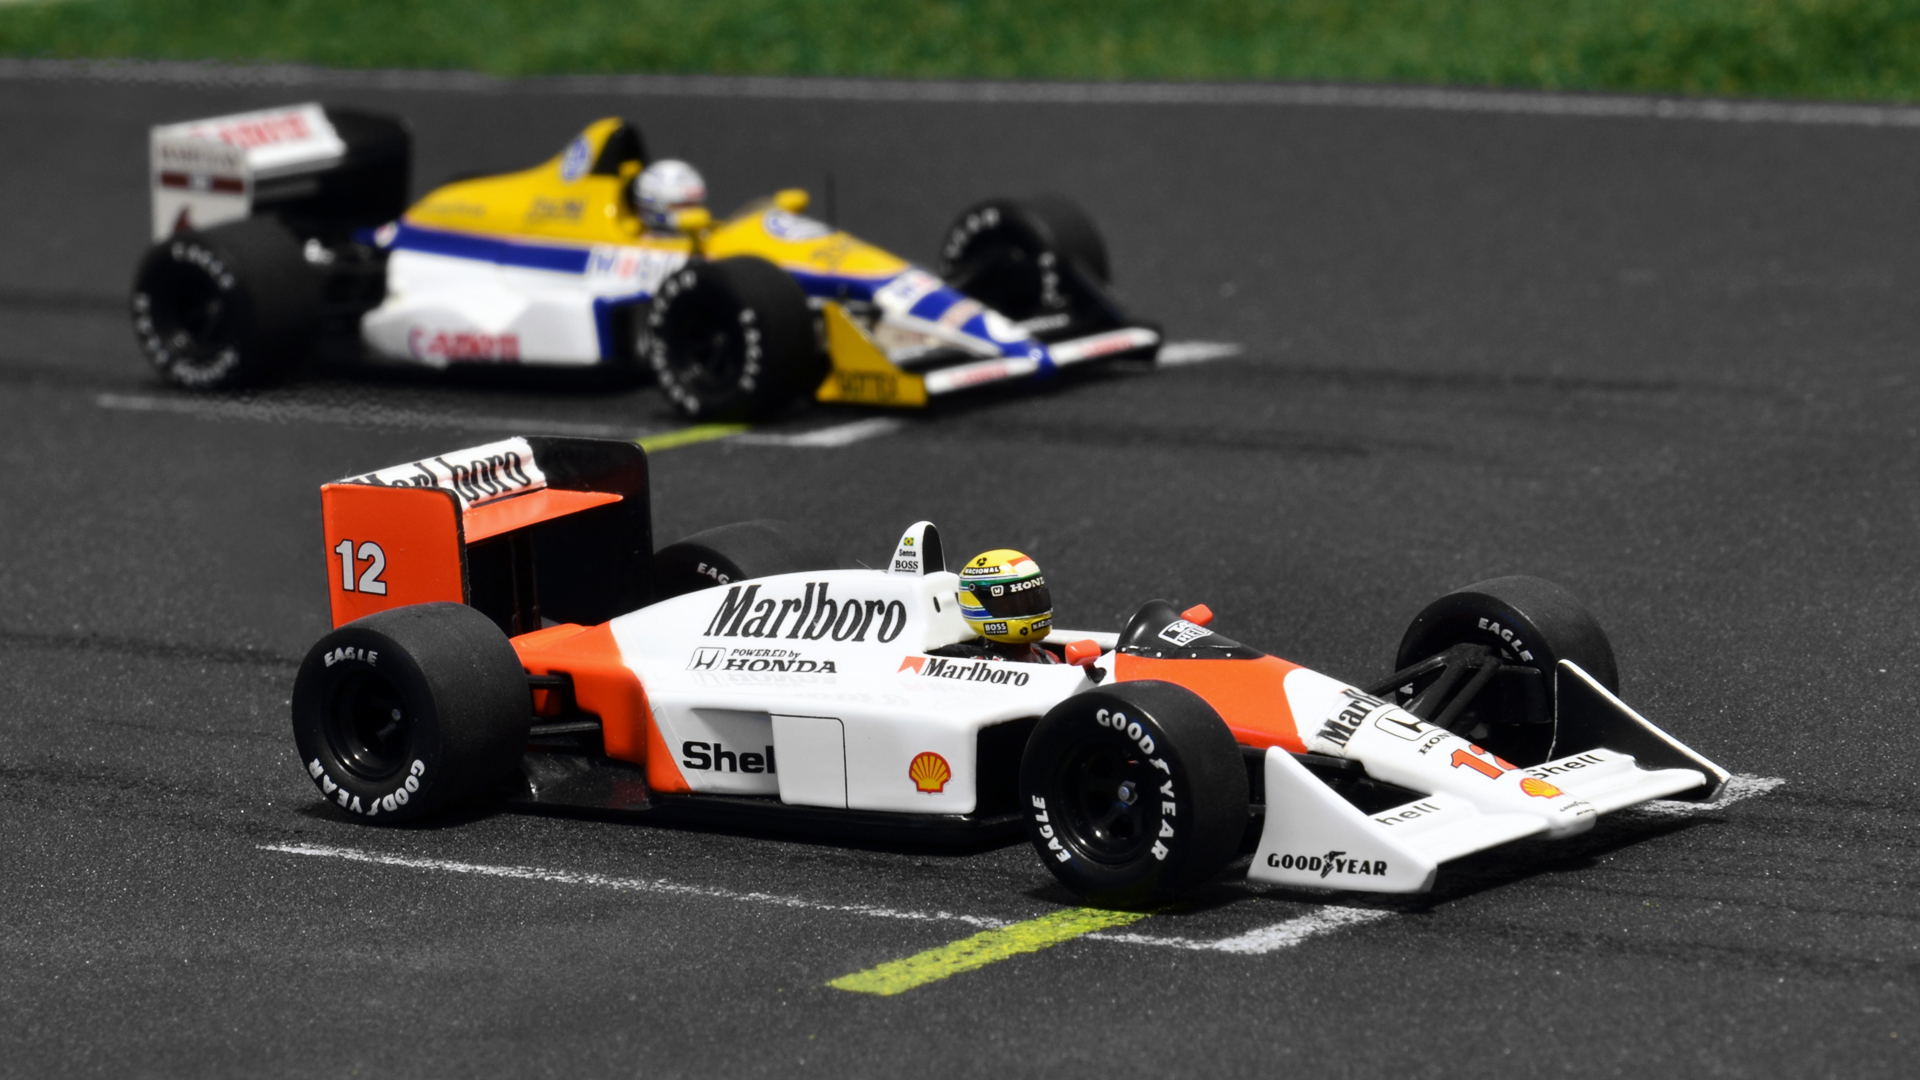 McLaren MP4/4 Ayrton Senna & Williams FW12 Ricardo Patrese 1988 - Minichamps 1:43